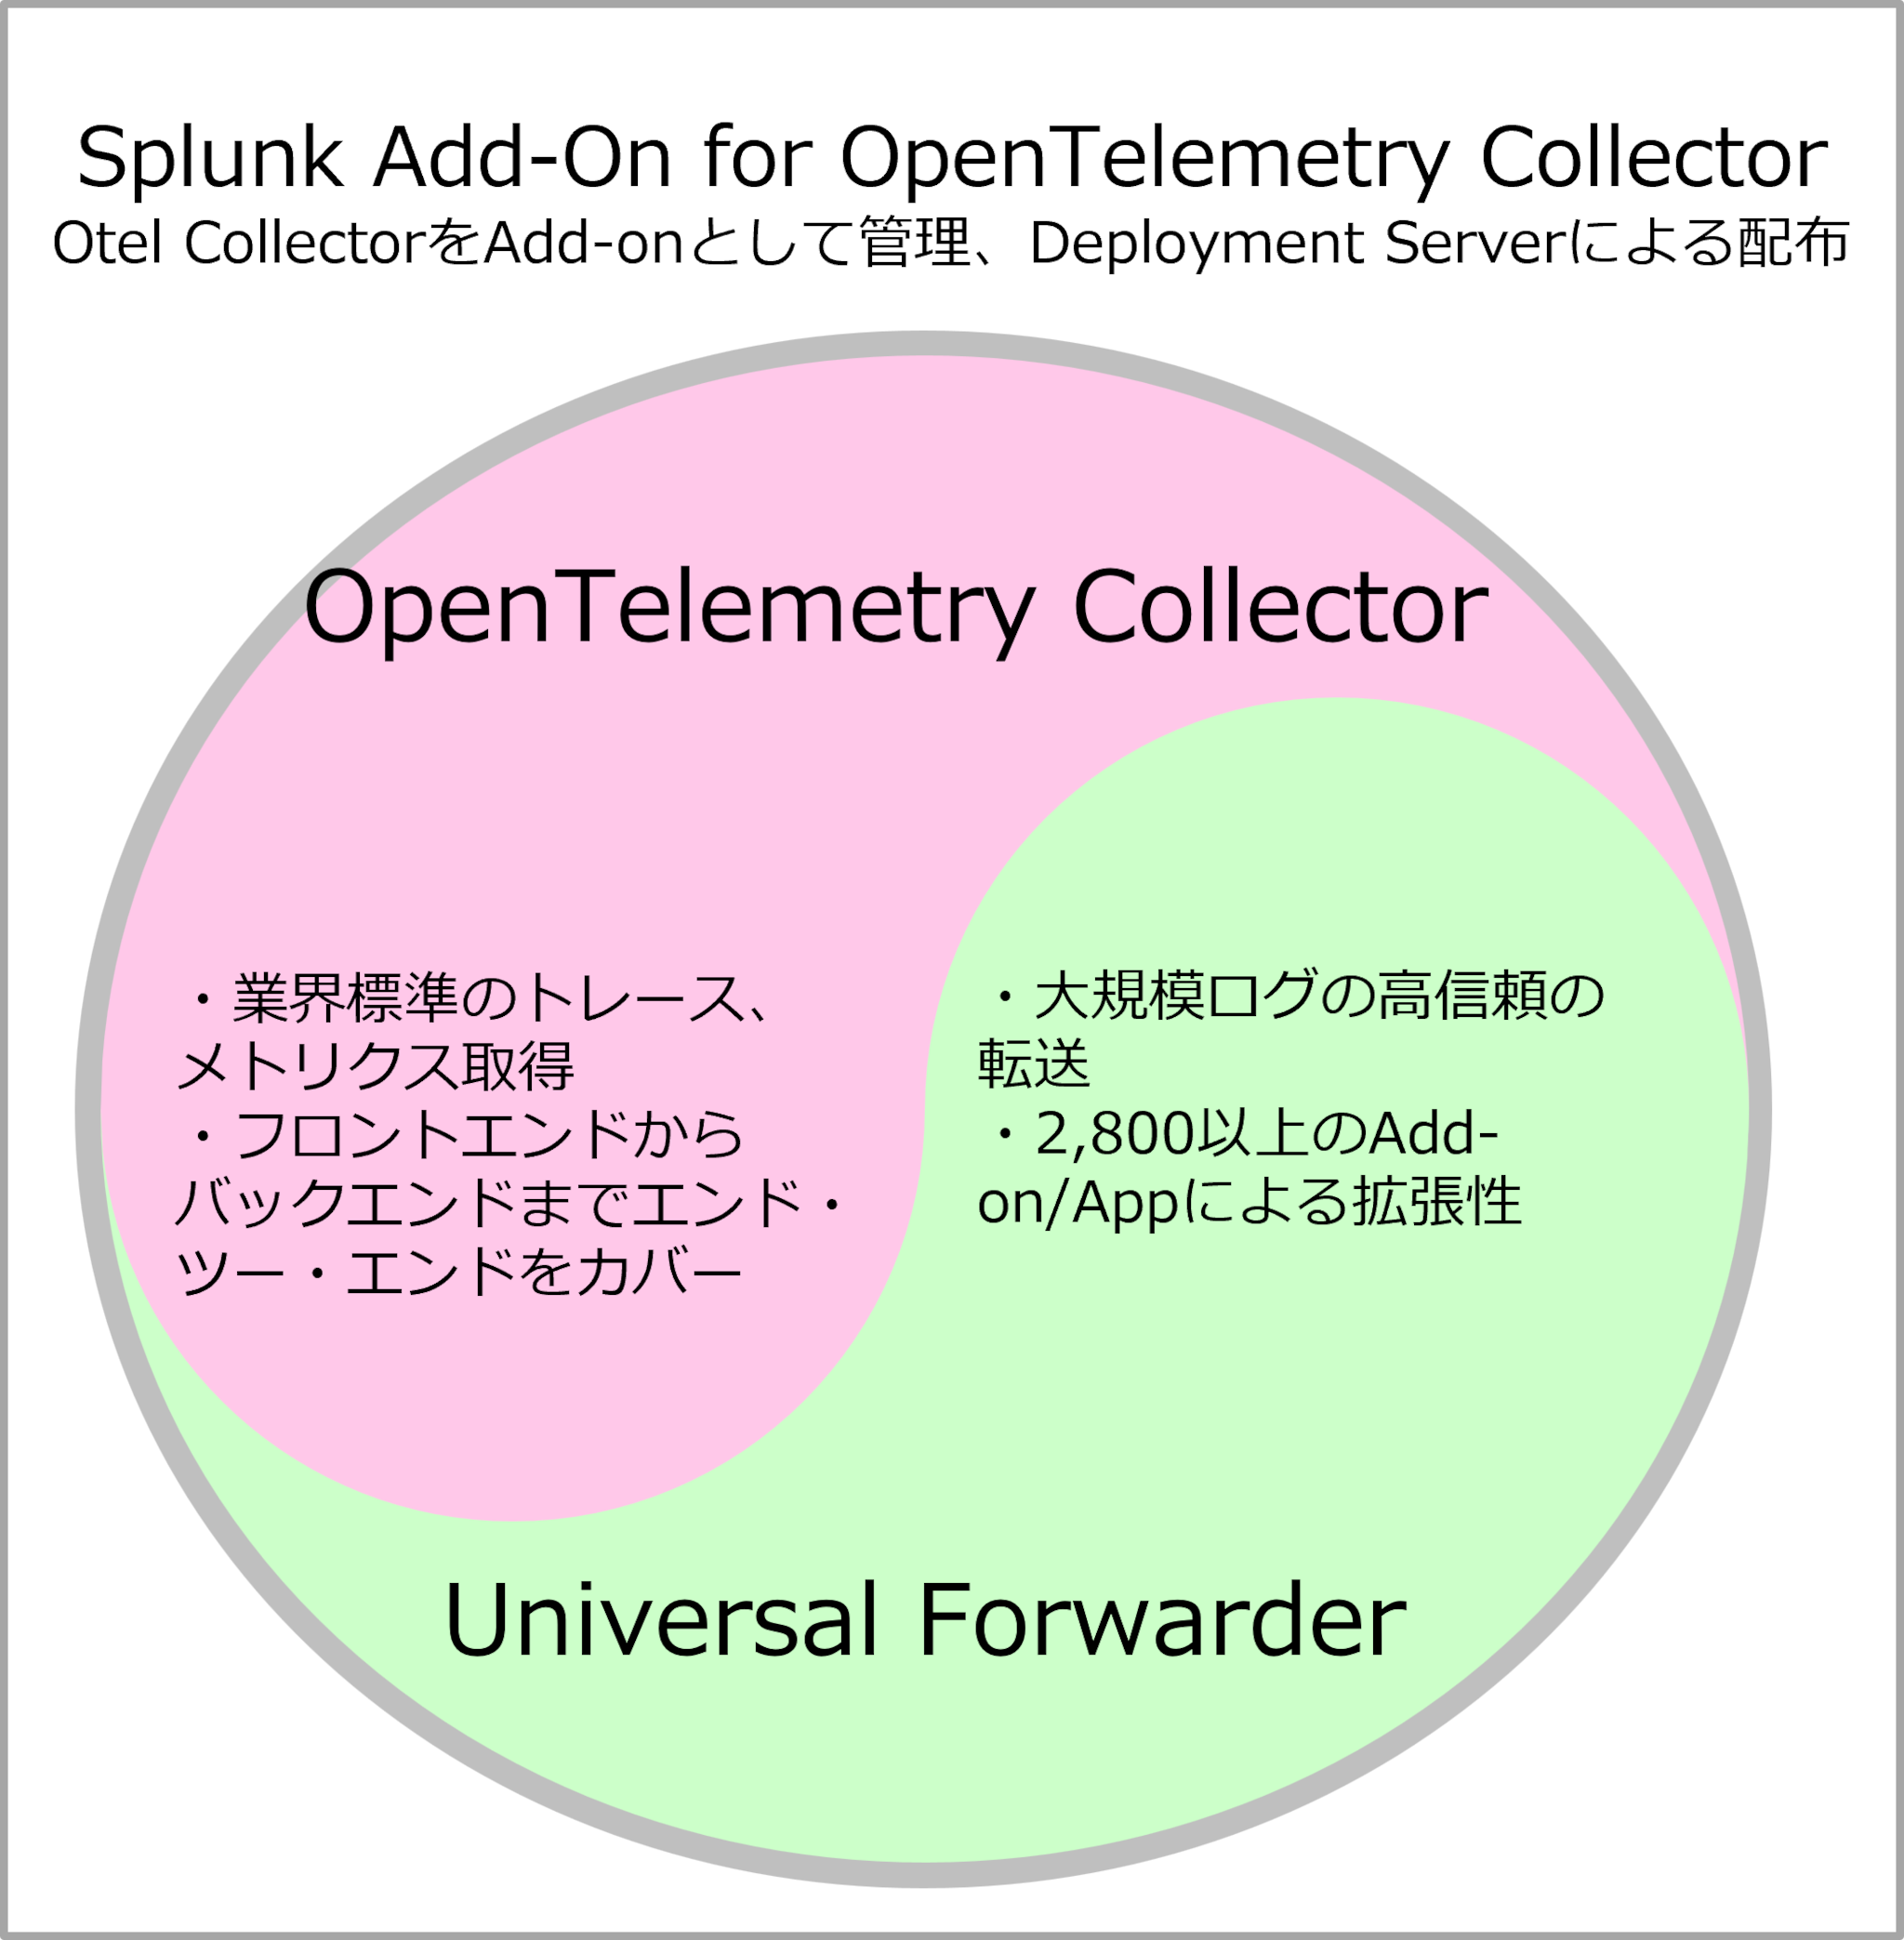 OpenTelemetry CollectorとUniversal Forwarder